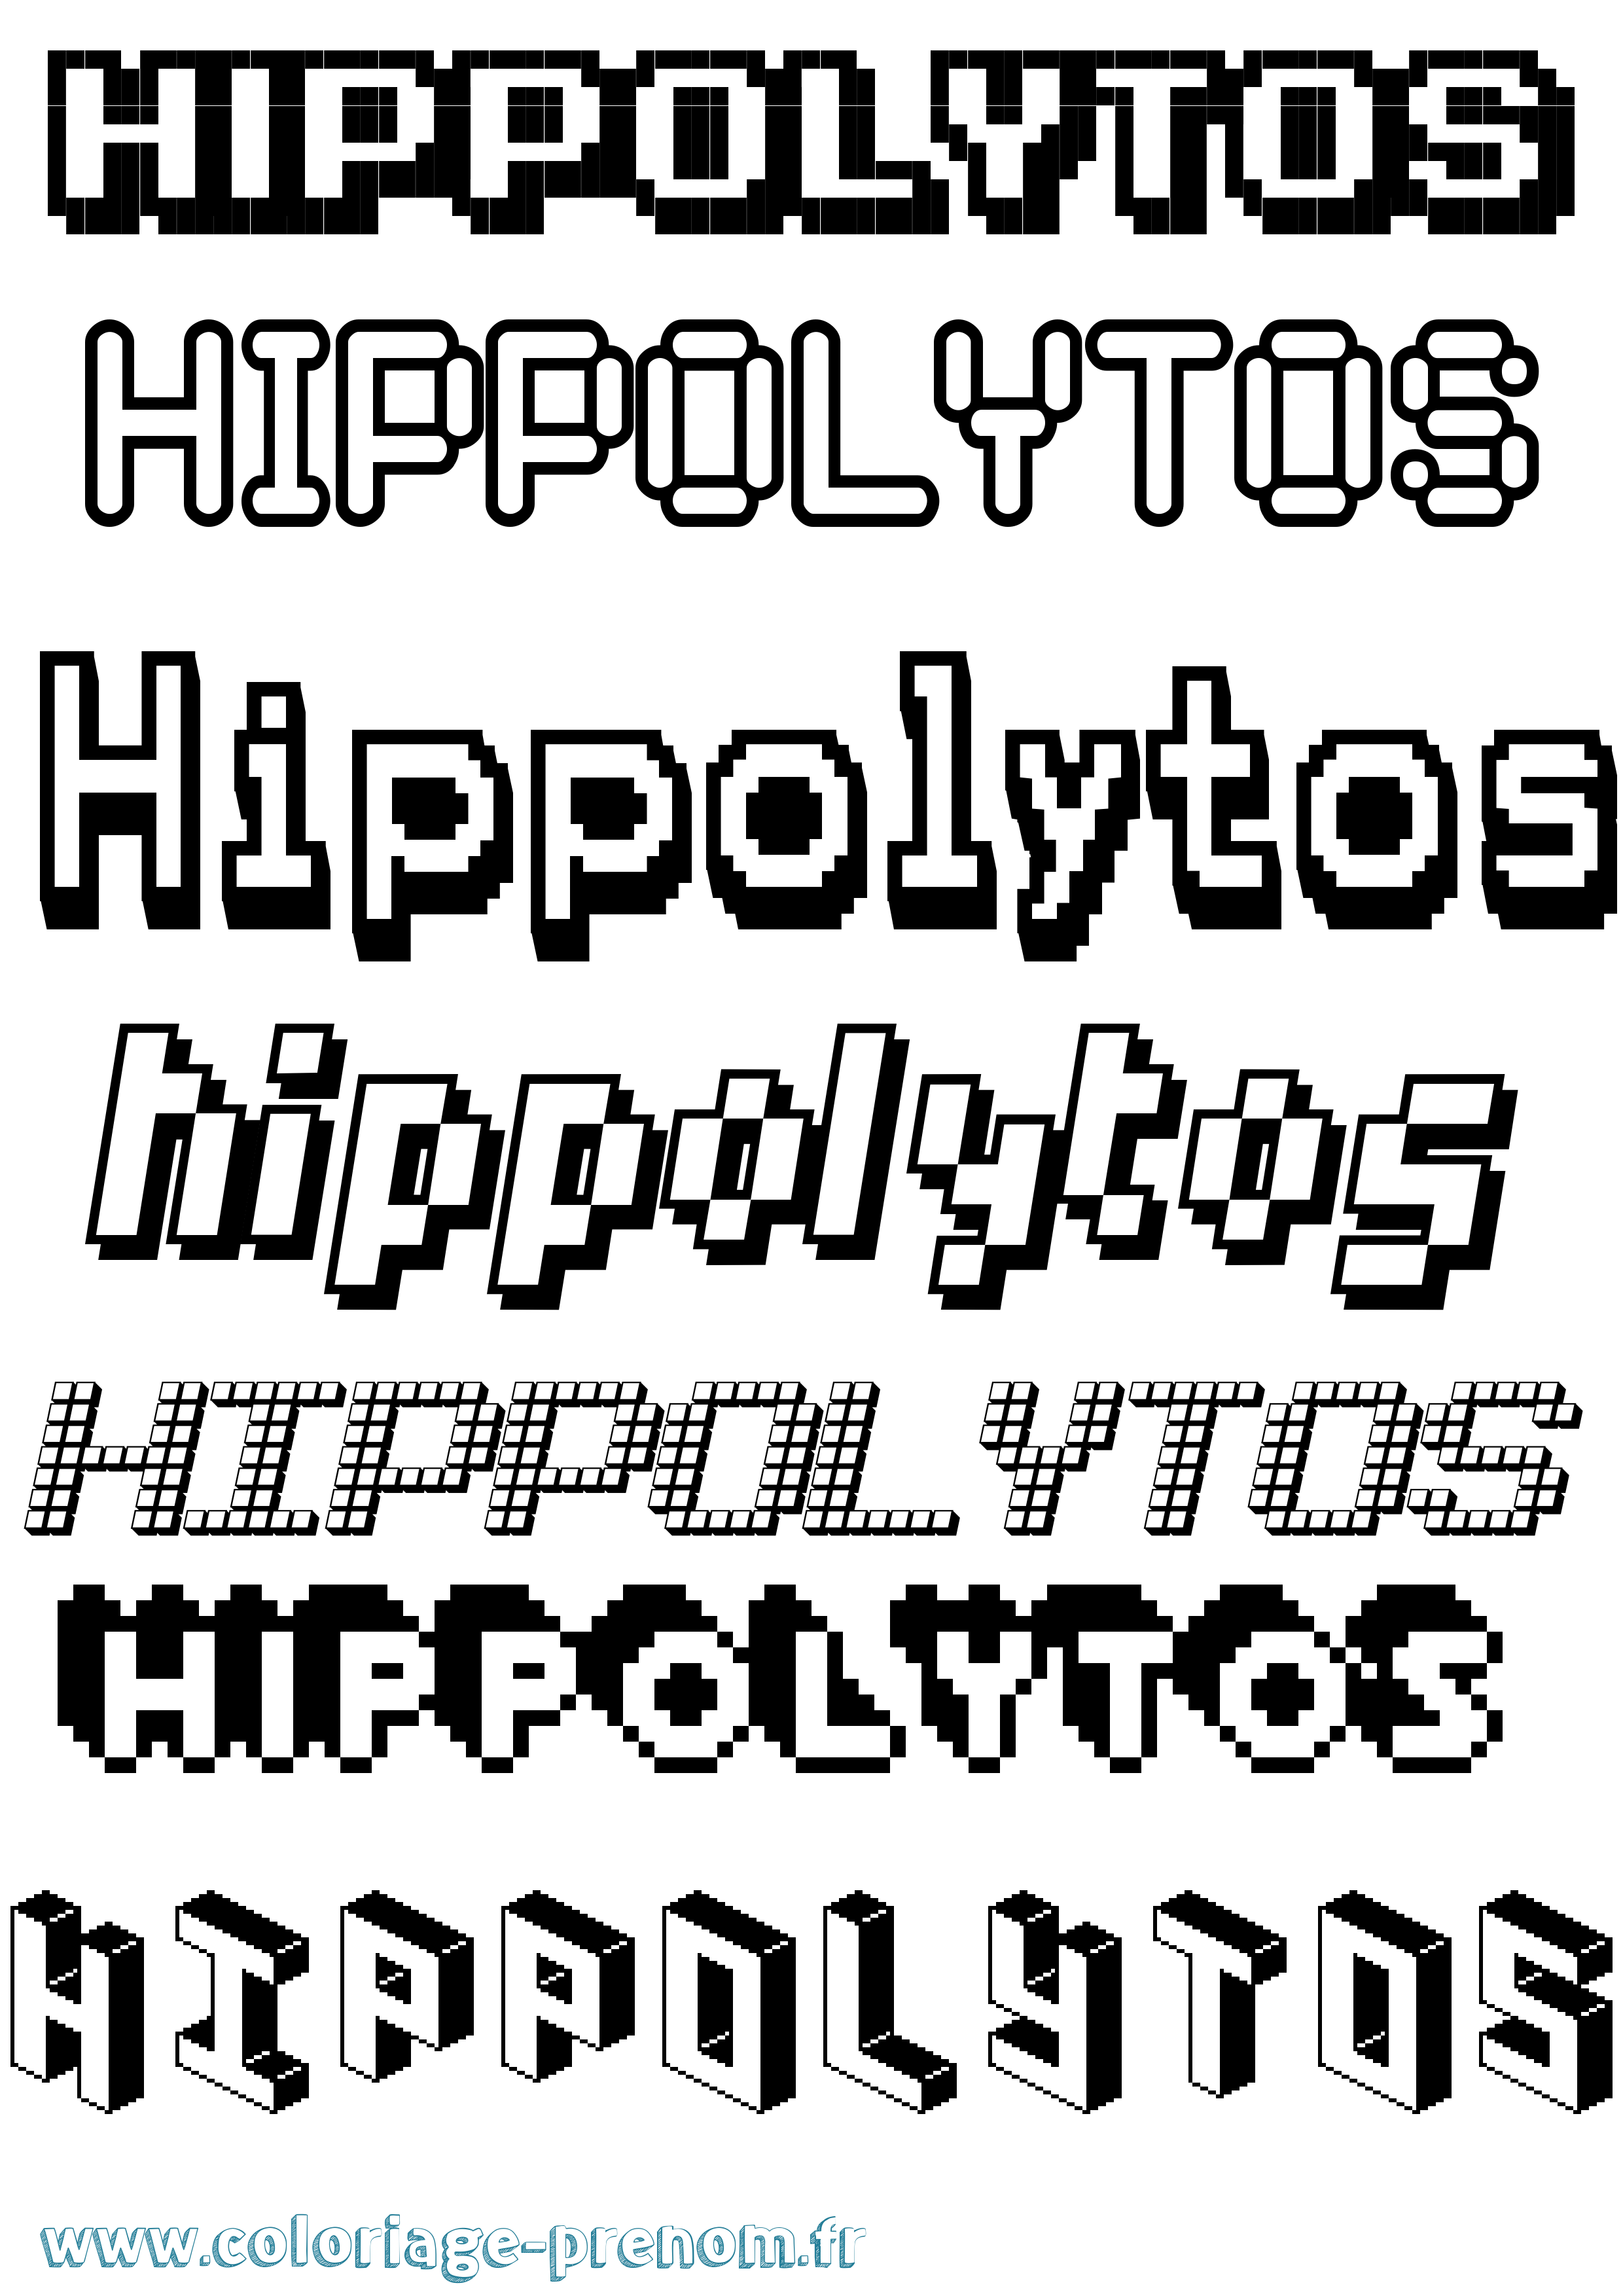 Coloriage prénom Hippolytos Pixel